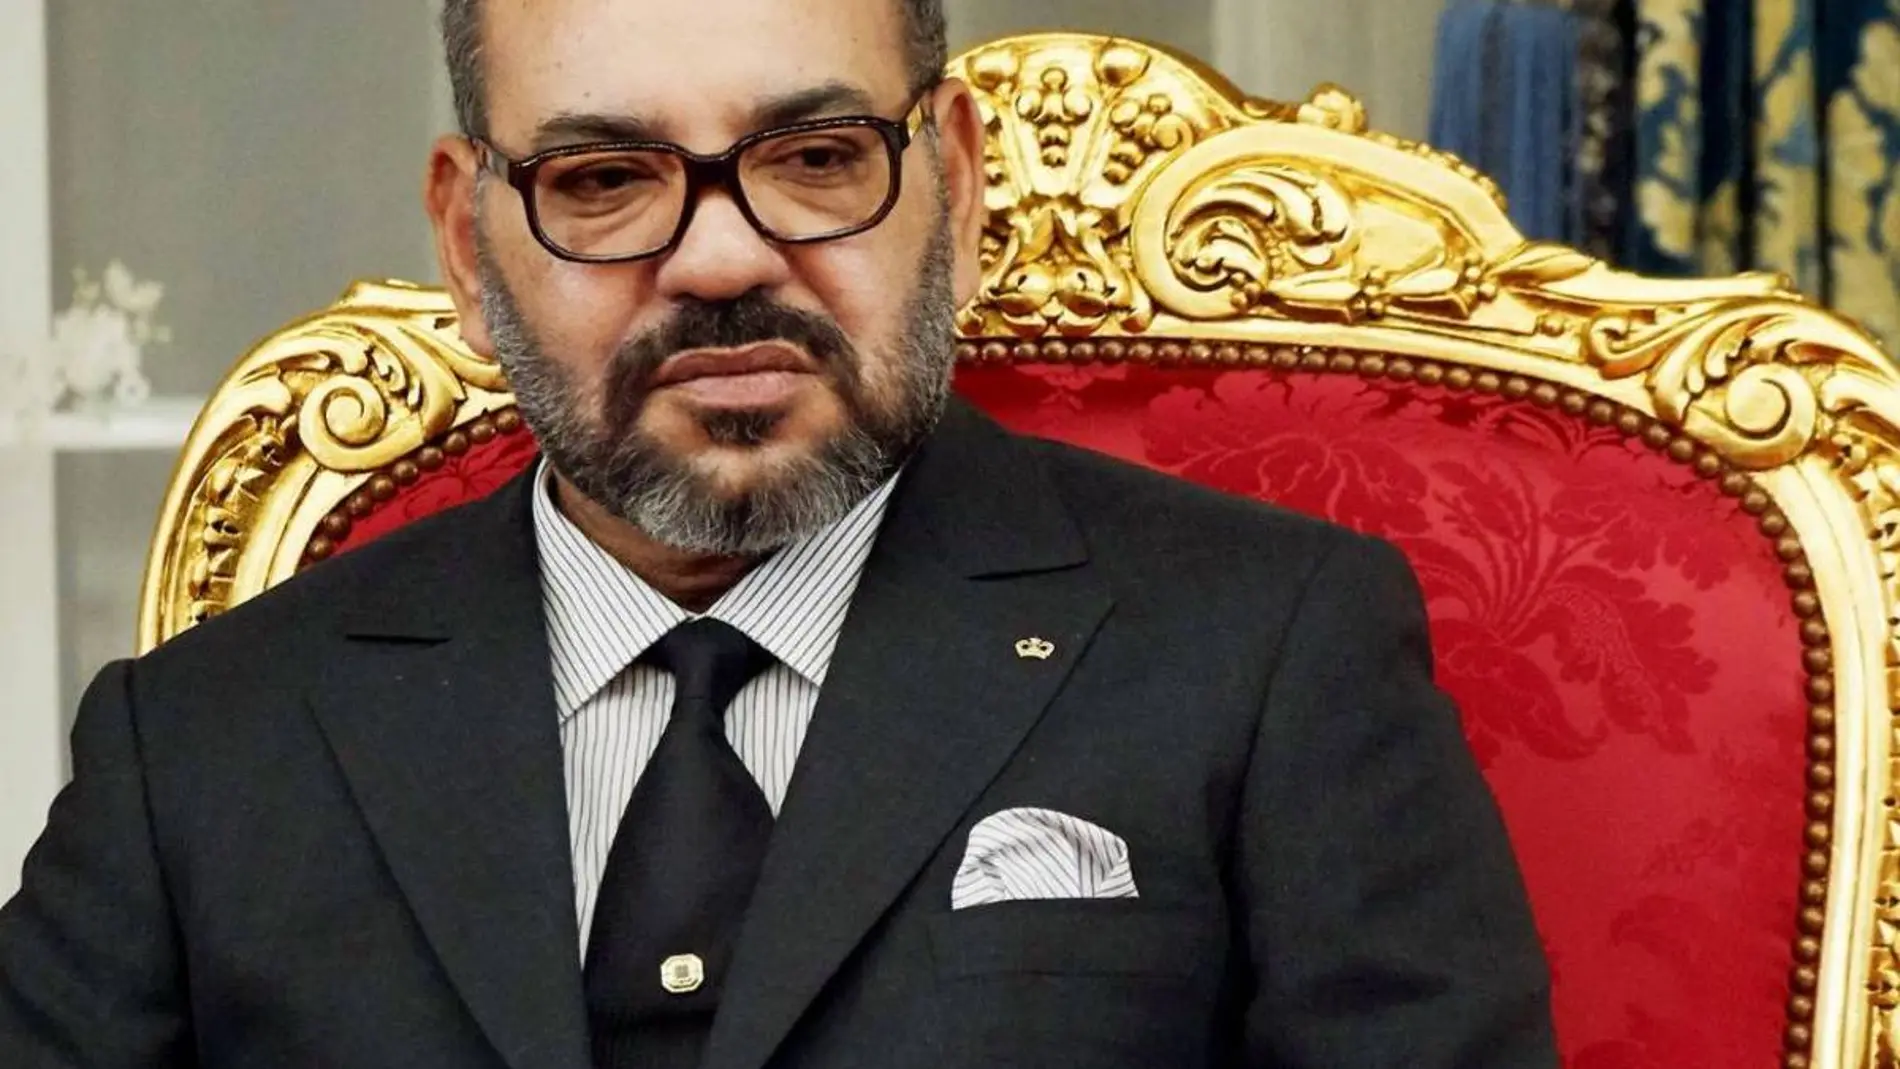 Esta es la enorme fortuna de Mohamed VI, rey de Marruecos